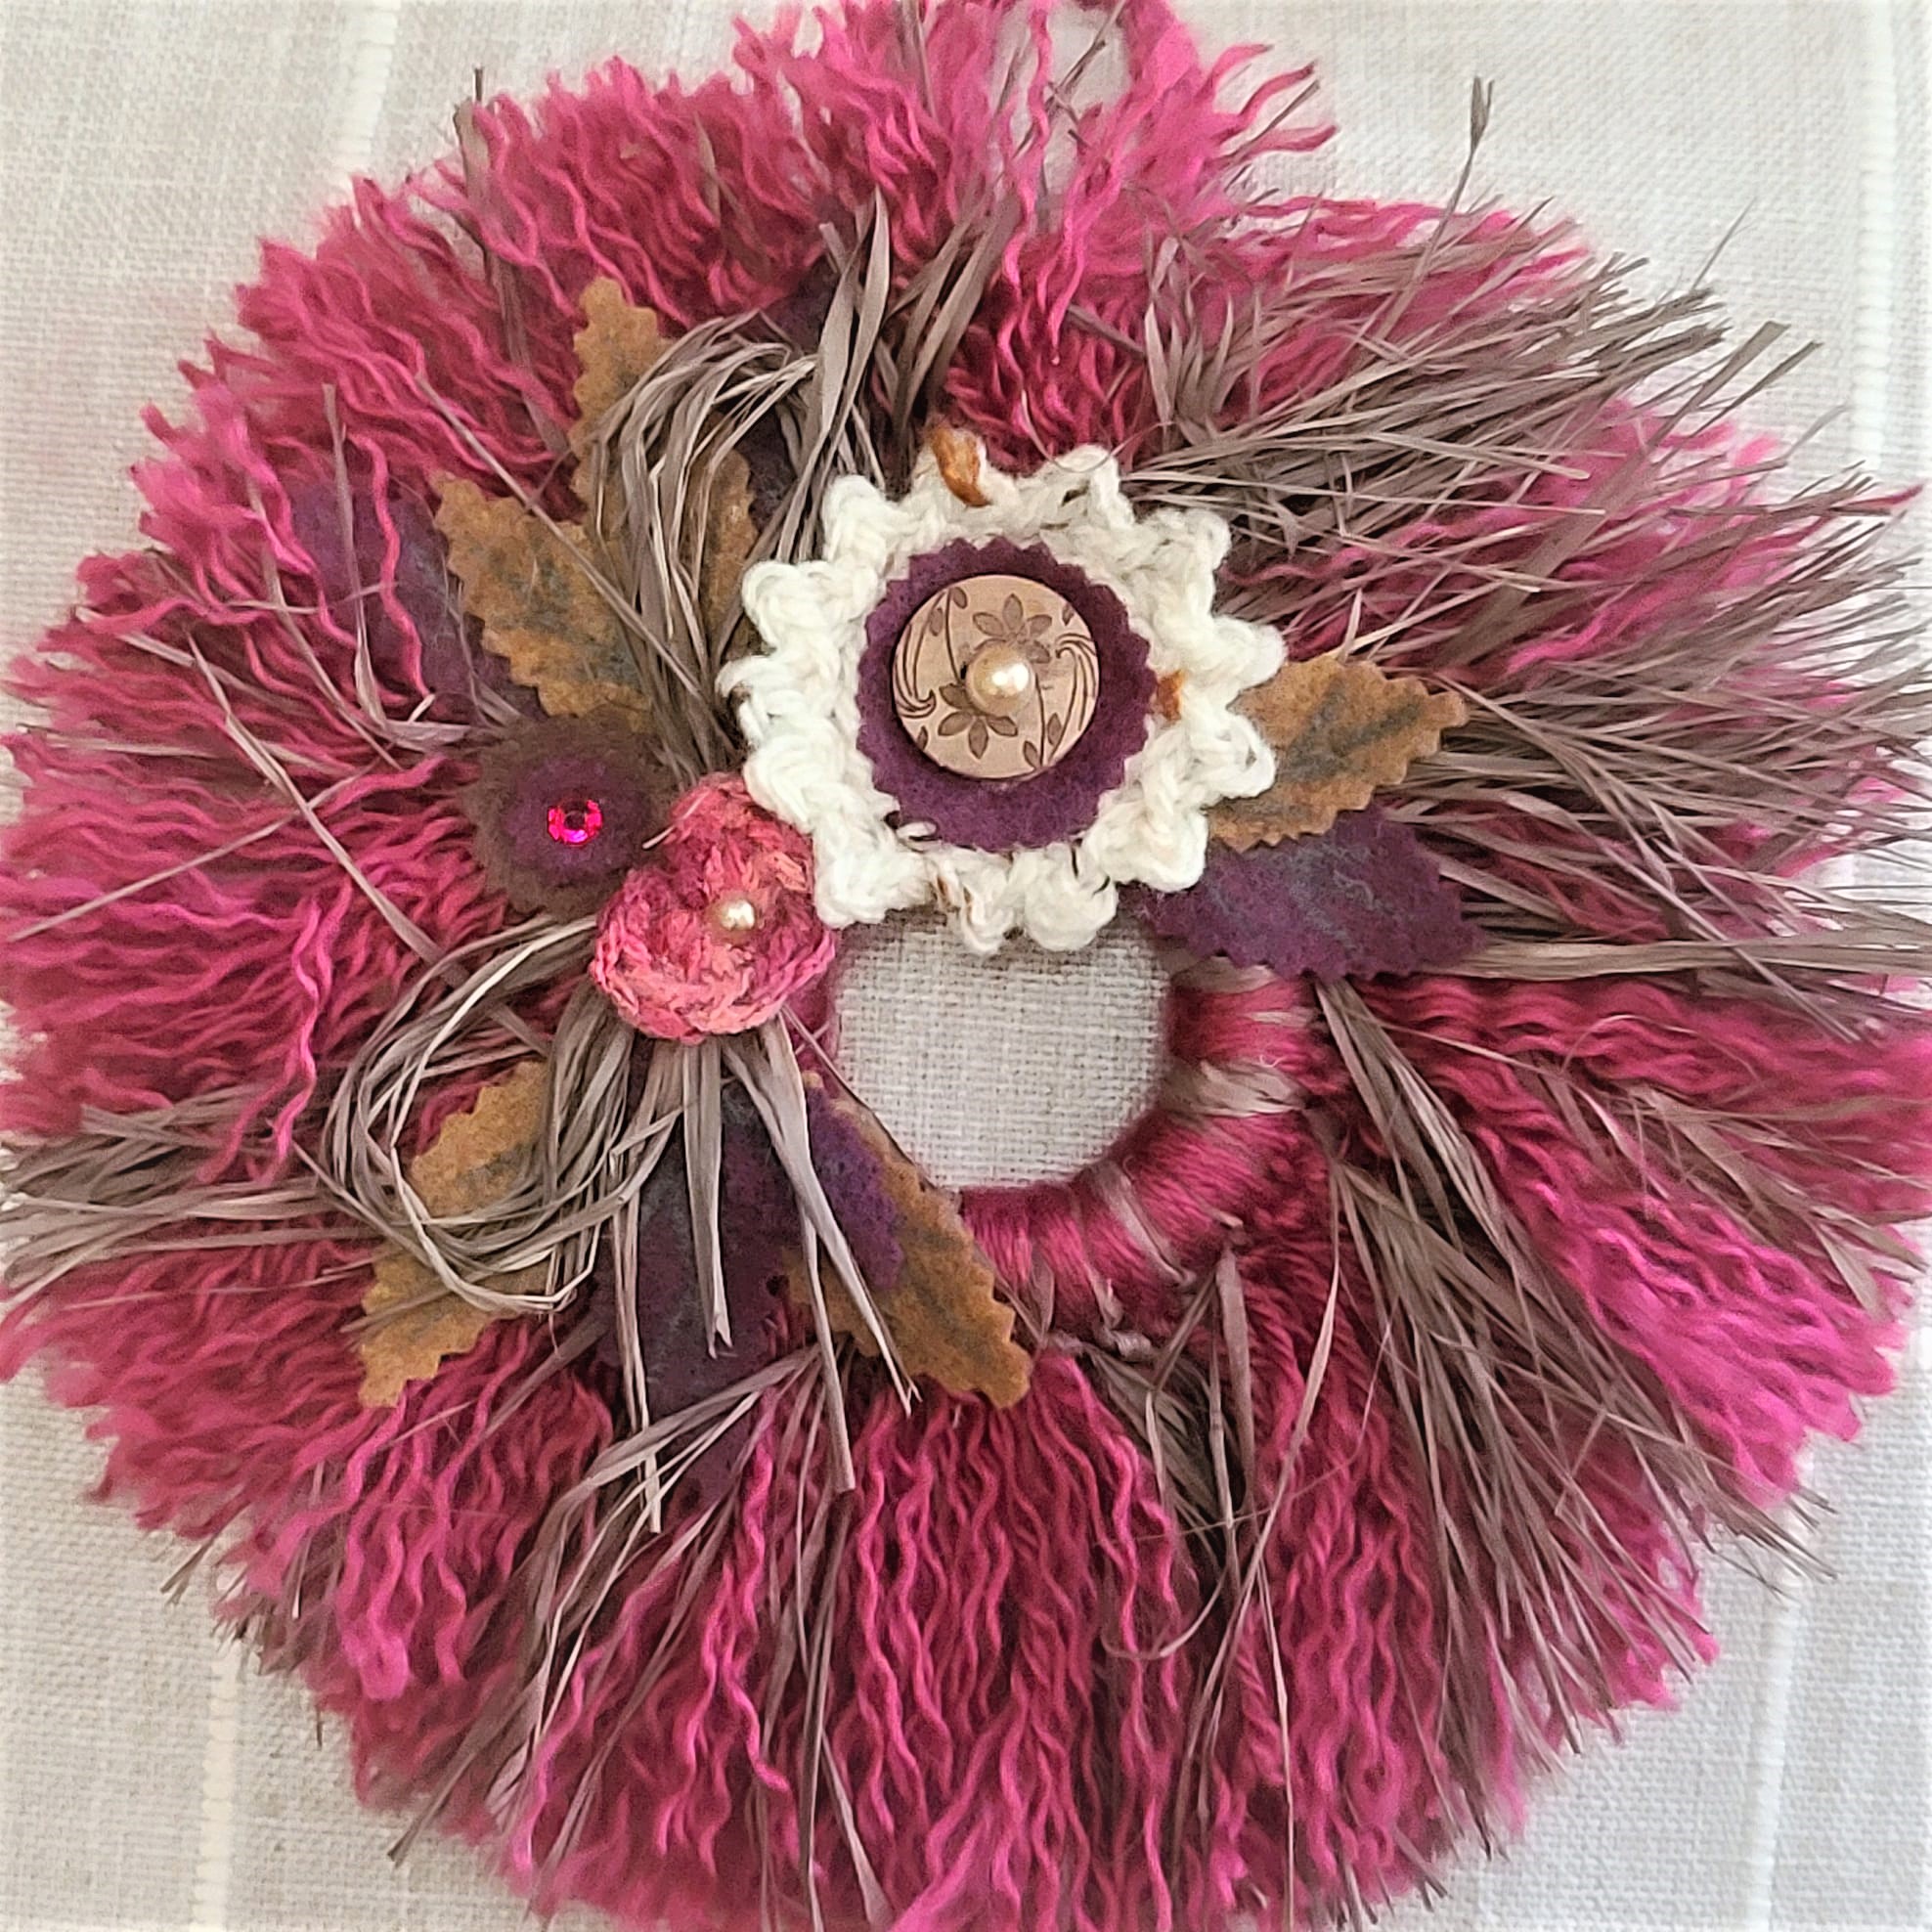 Mini yarn wreath ornament 7" romantic rose pink colors